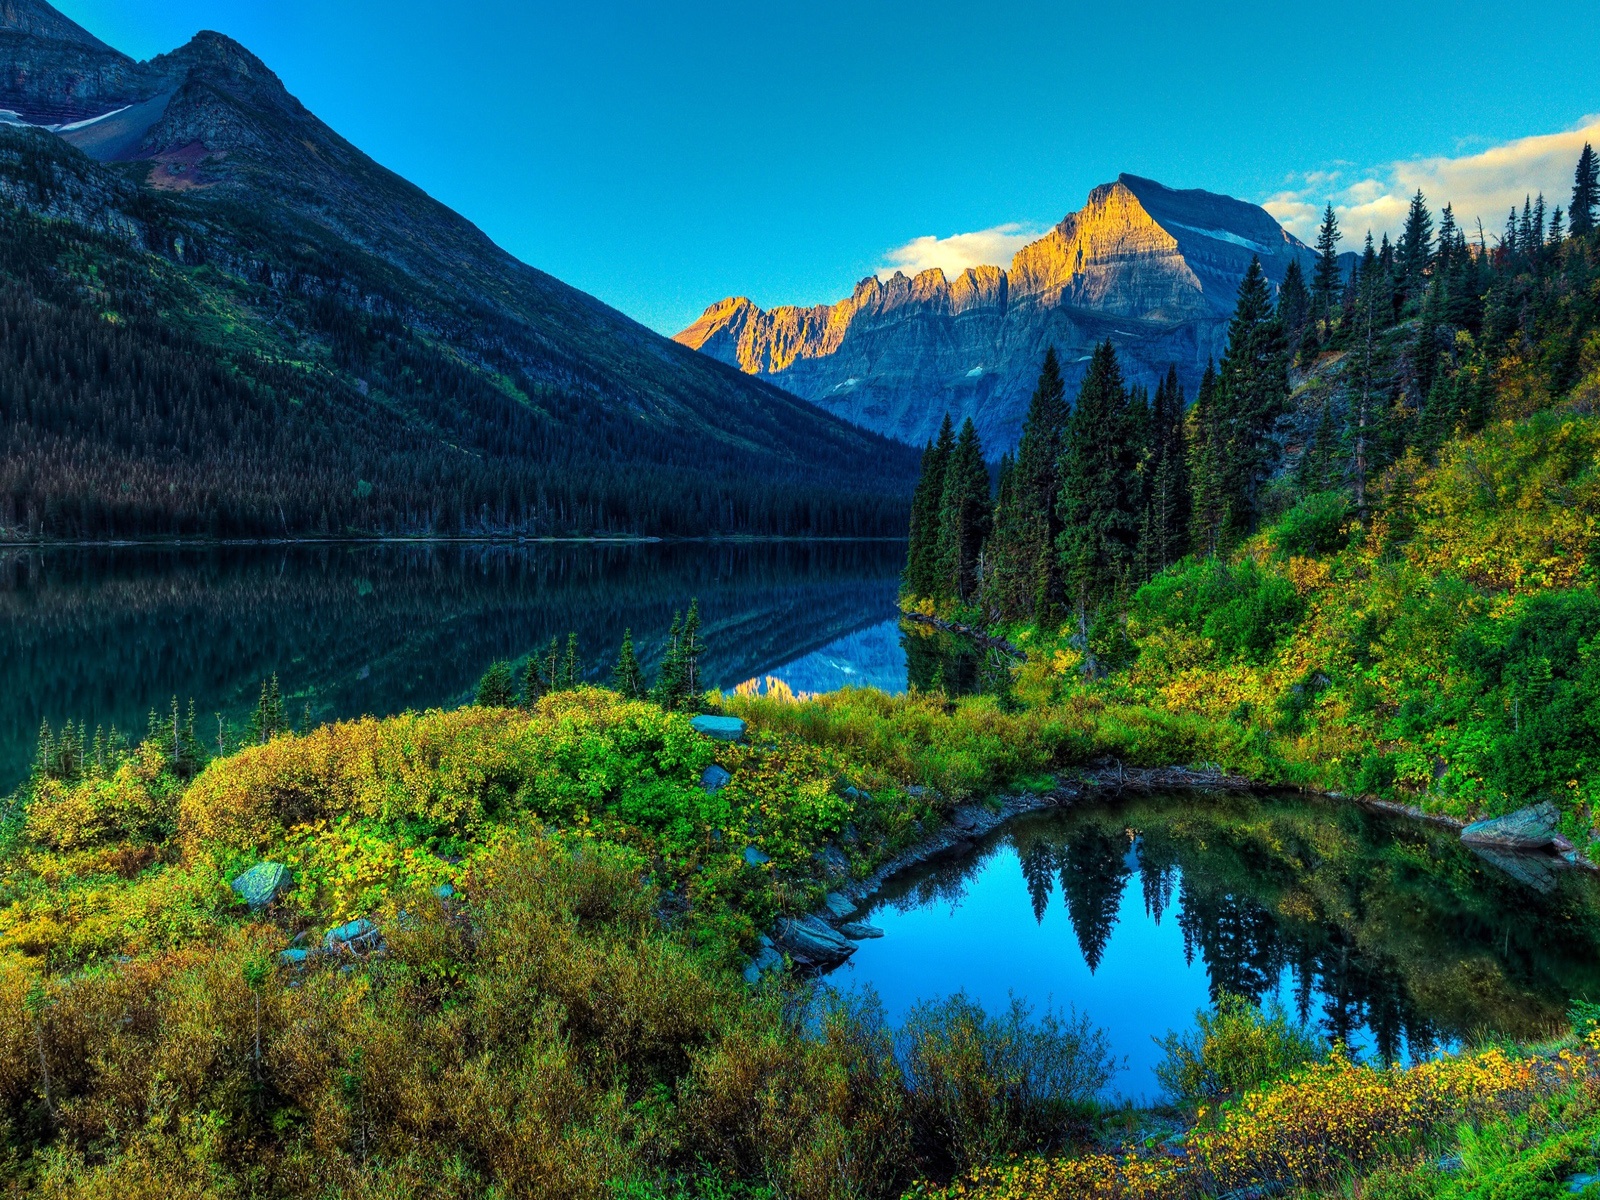 Lake Mountain Scenery Wallpaper in jpg format for free download